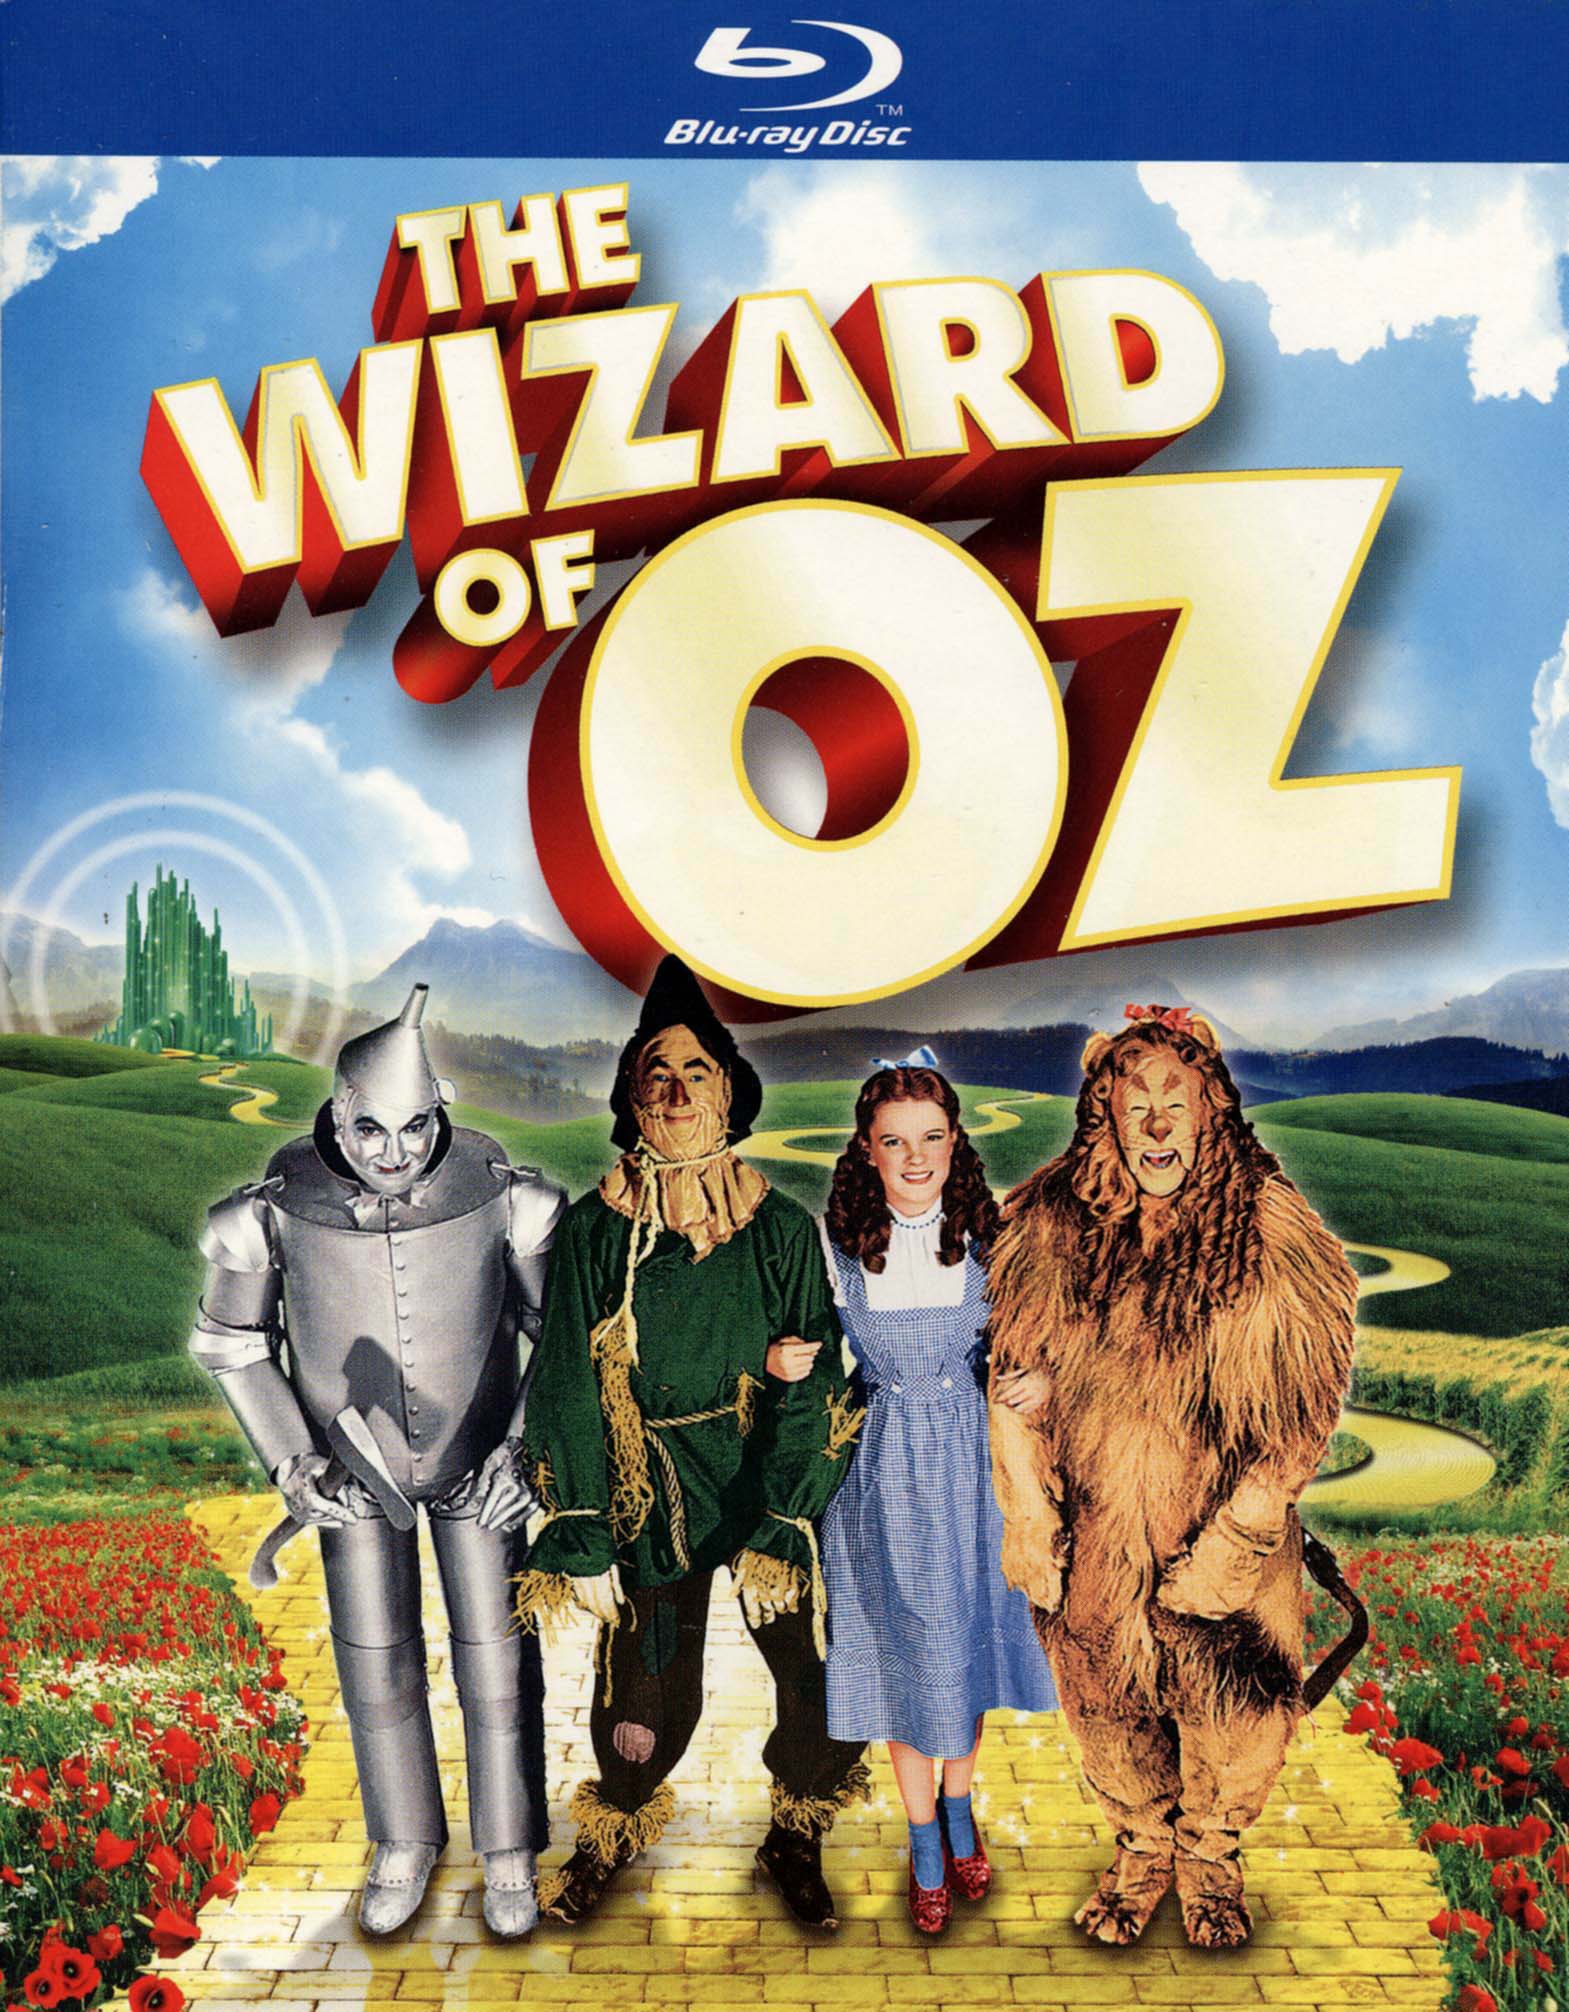 Wizard of Oz: 75th Anniversary [Blu-ray] [1939] - Best Buy